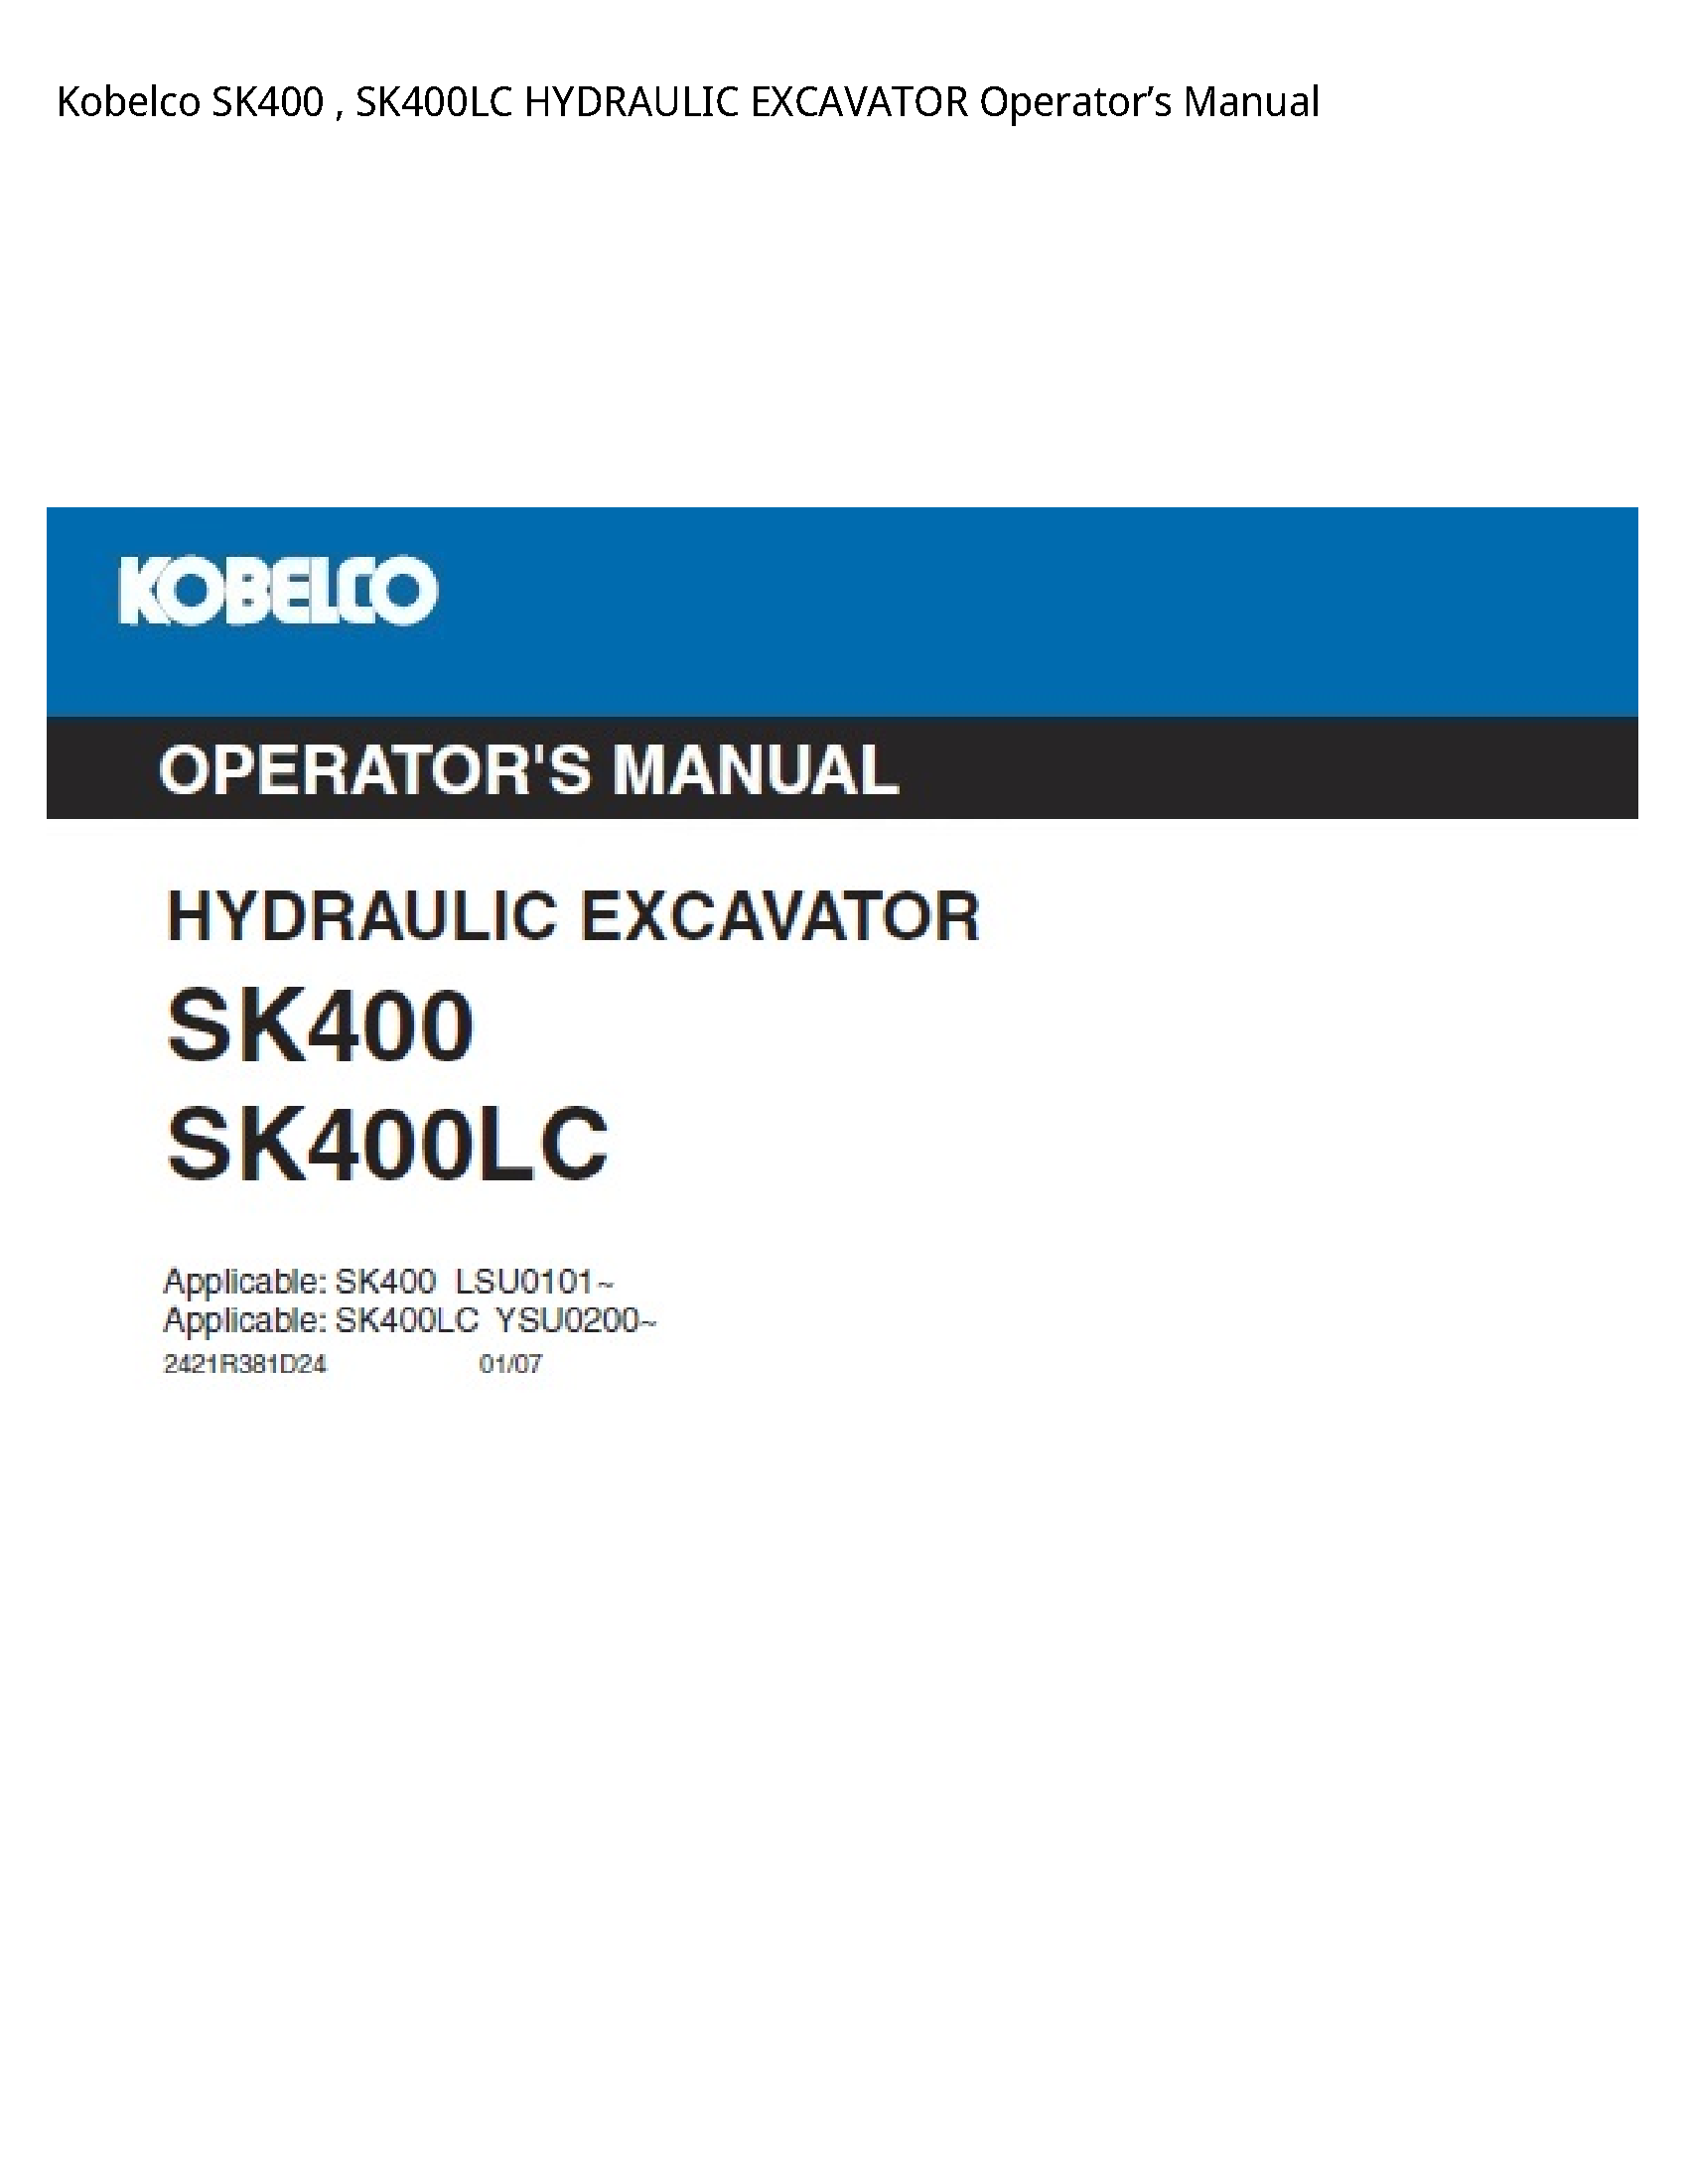 Kobelco SK400 HYDRAULIC EXCAVATOR Operator’s manual